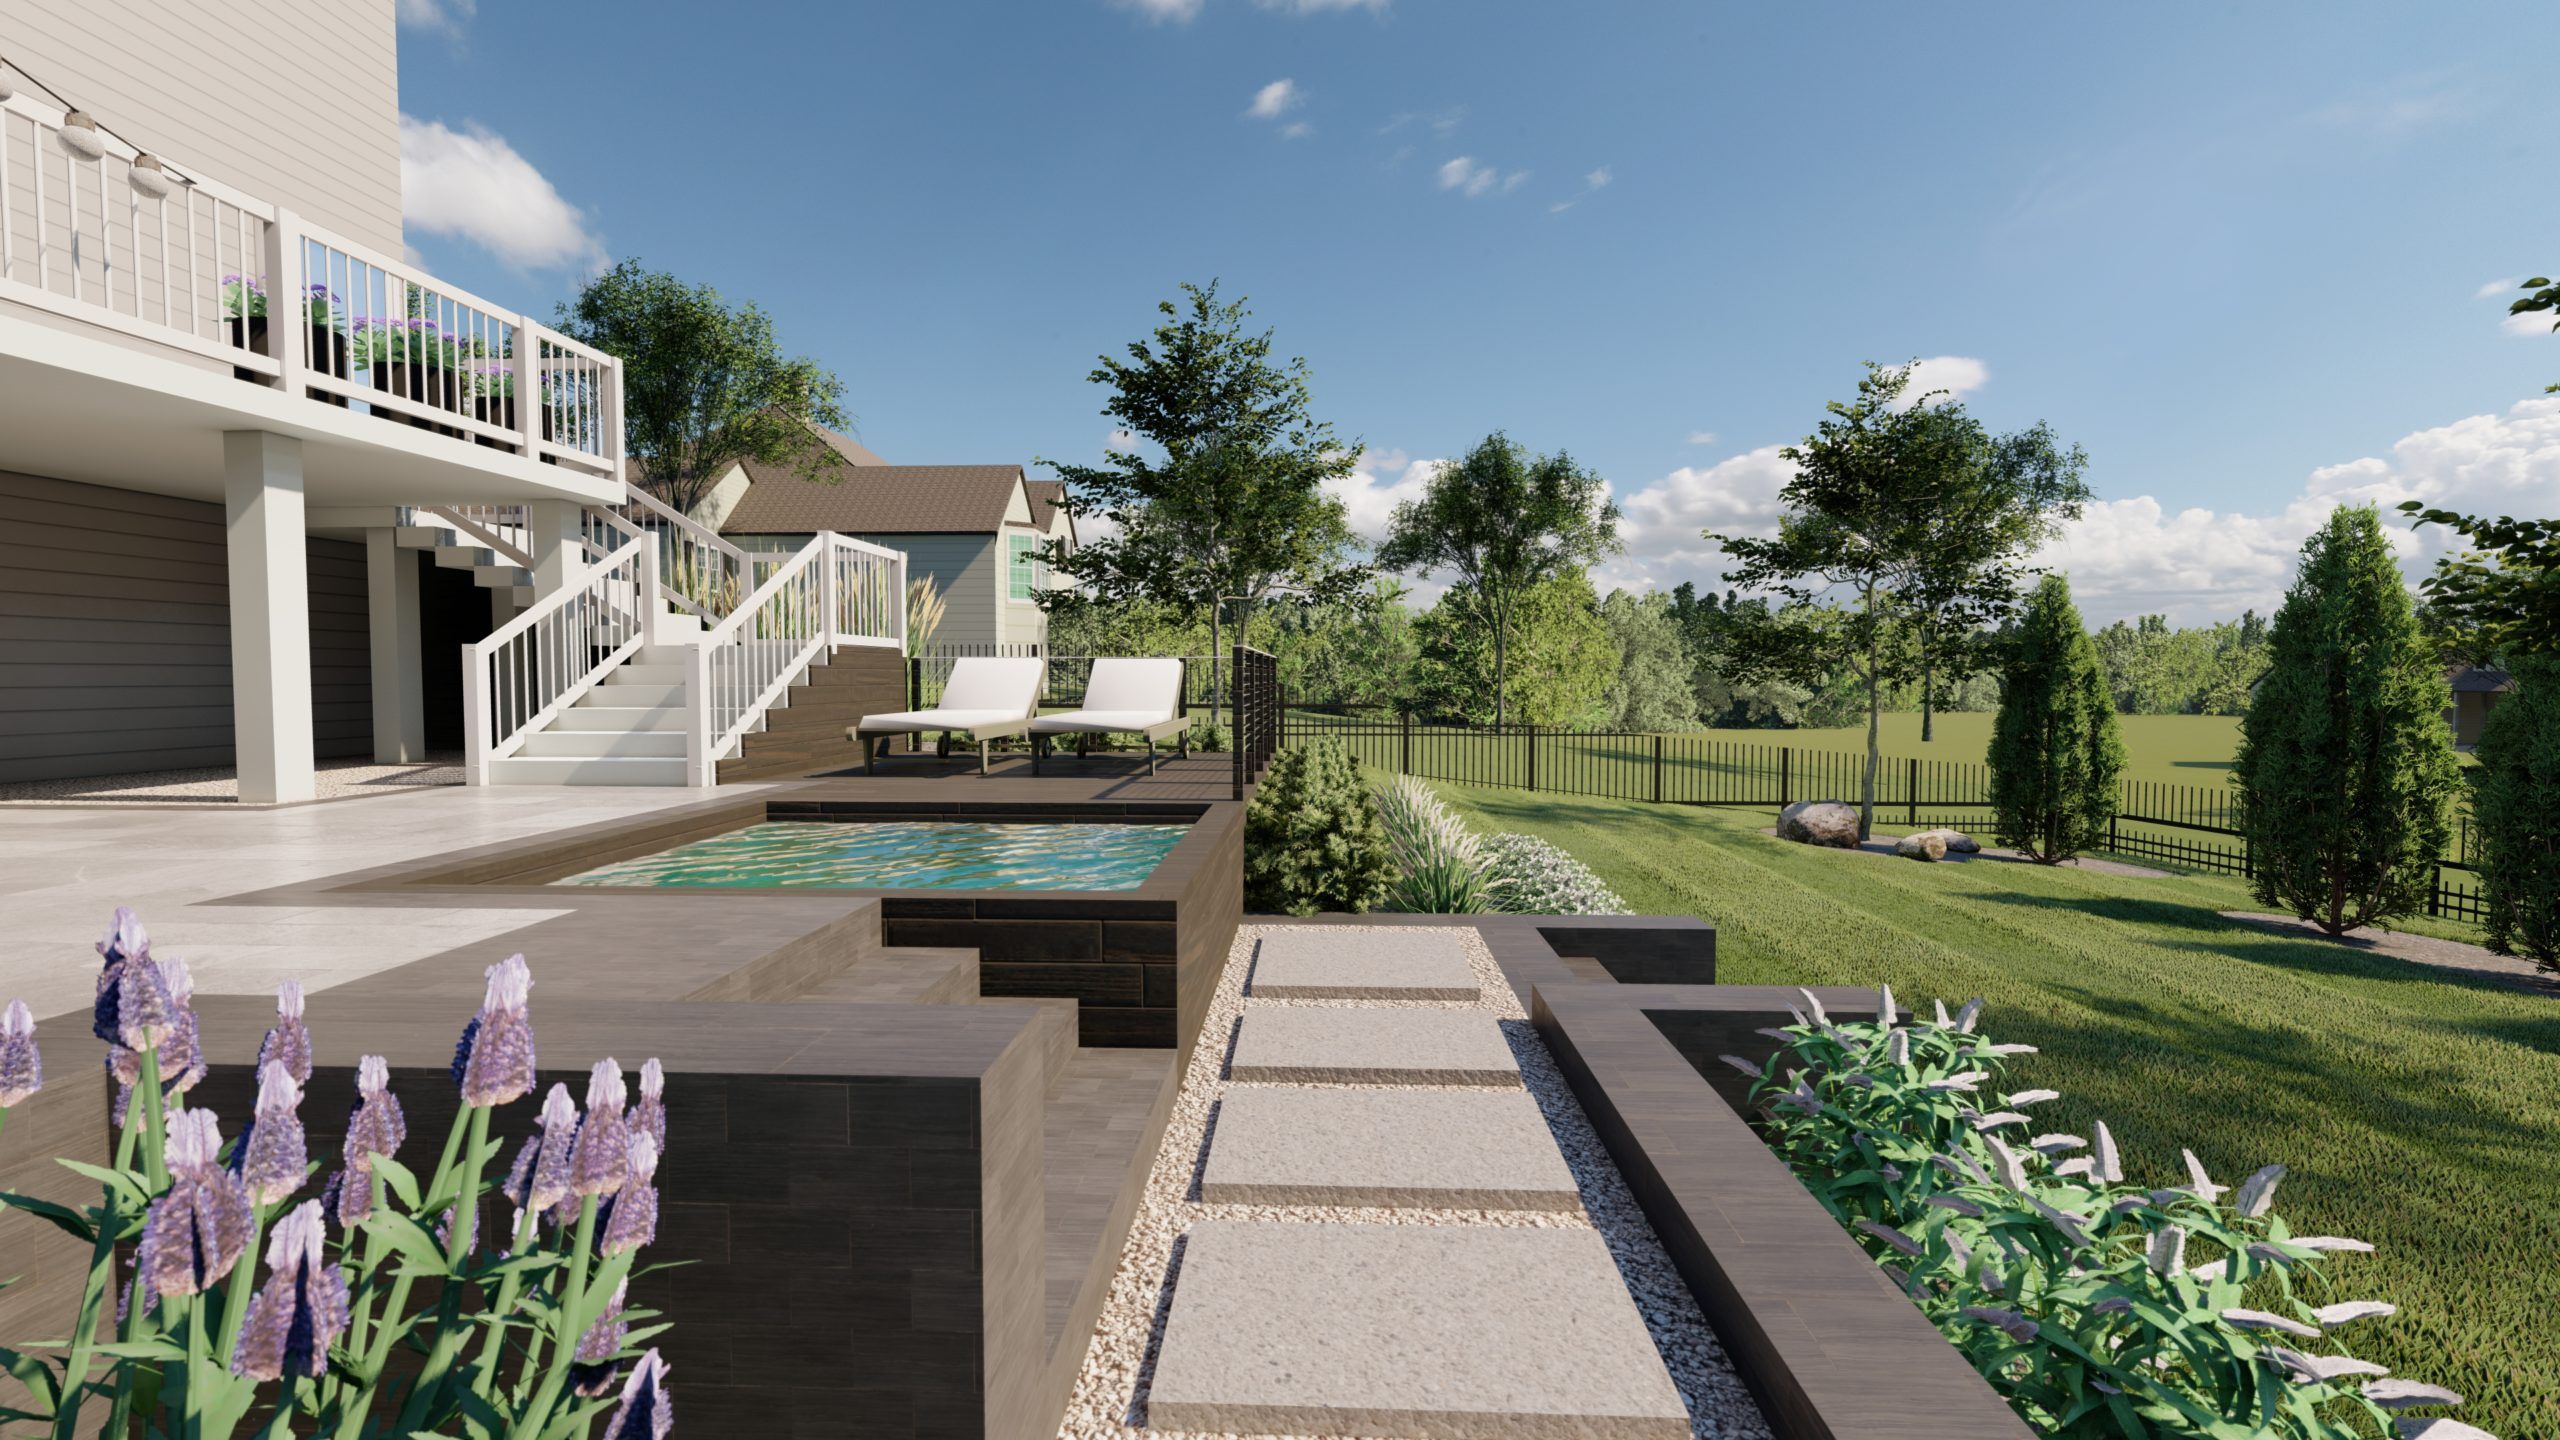 backyard hot tub rendering of a new landscape design plan